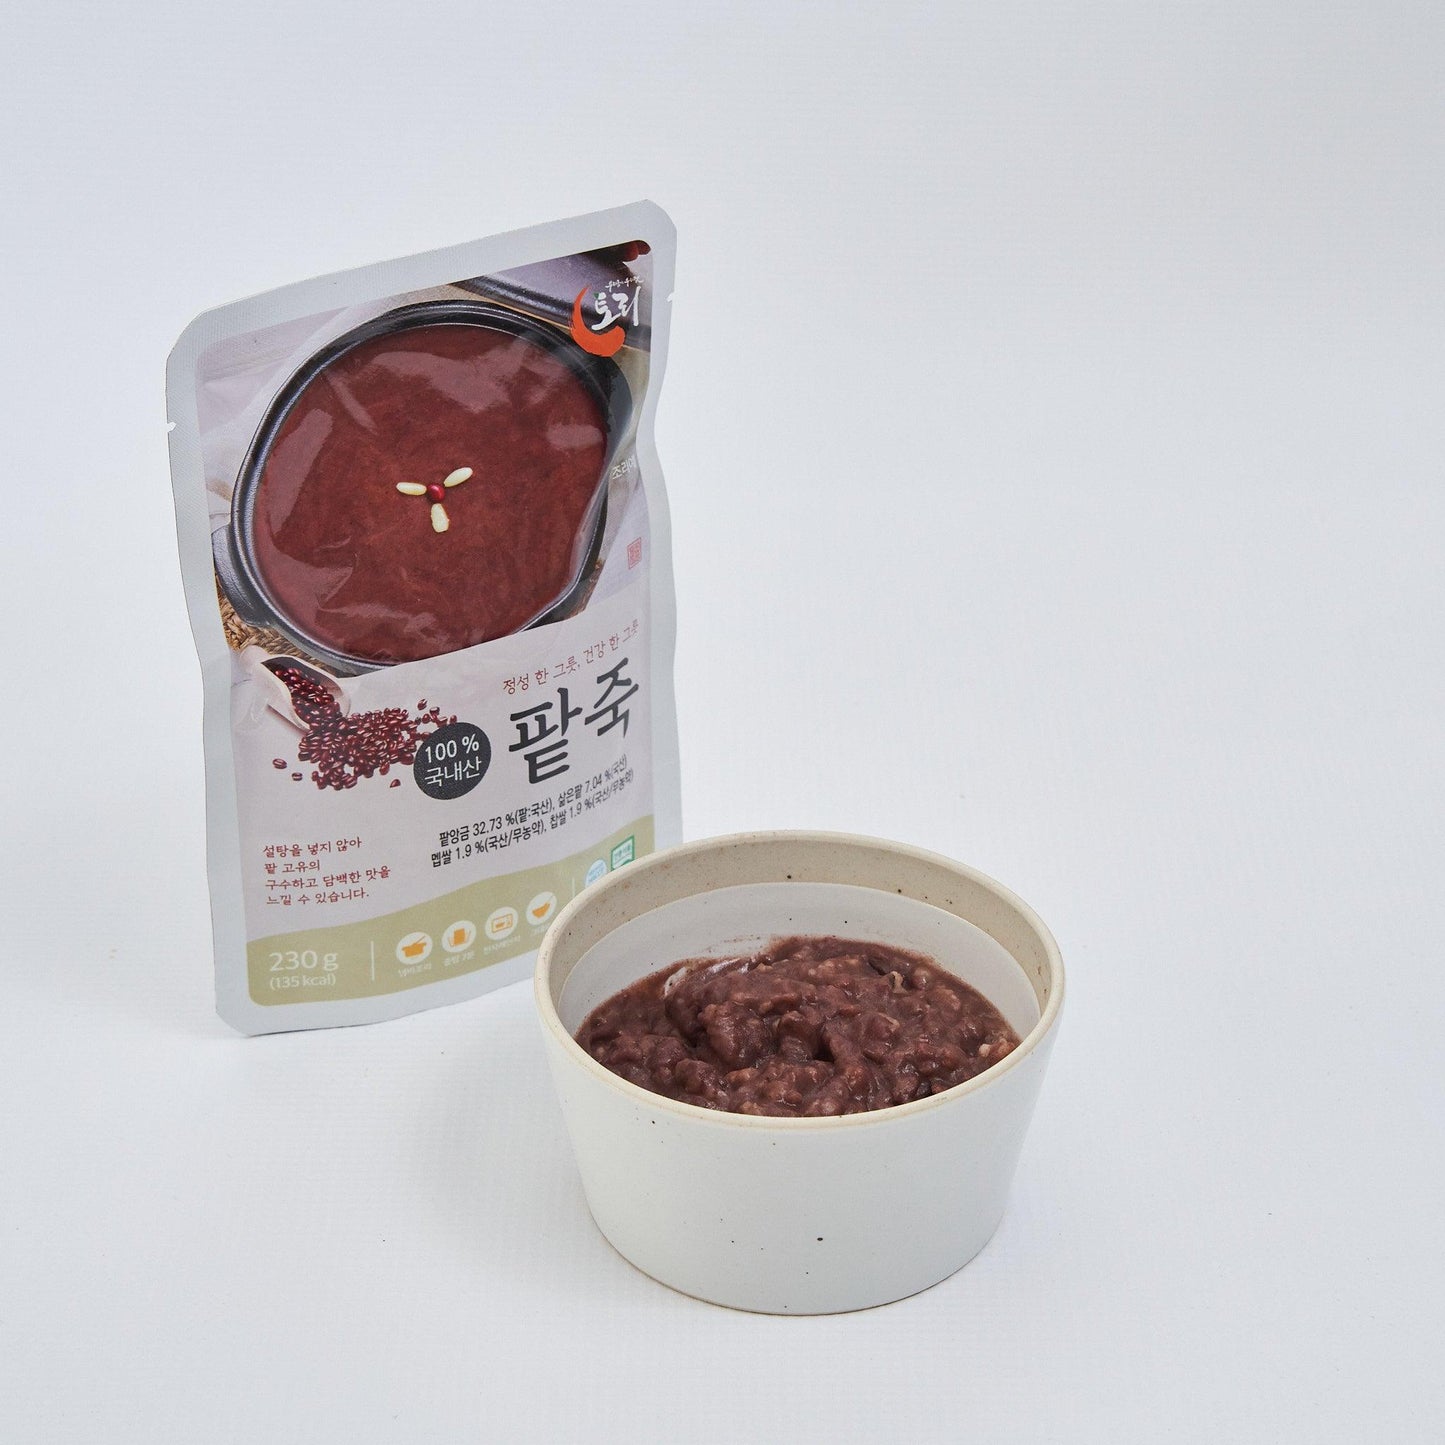 Red Bean Porridge x 2 Packs - Kim'C Market